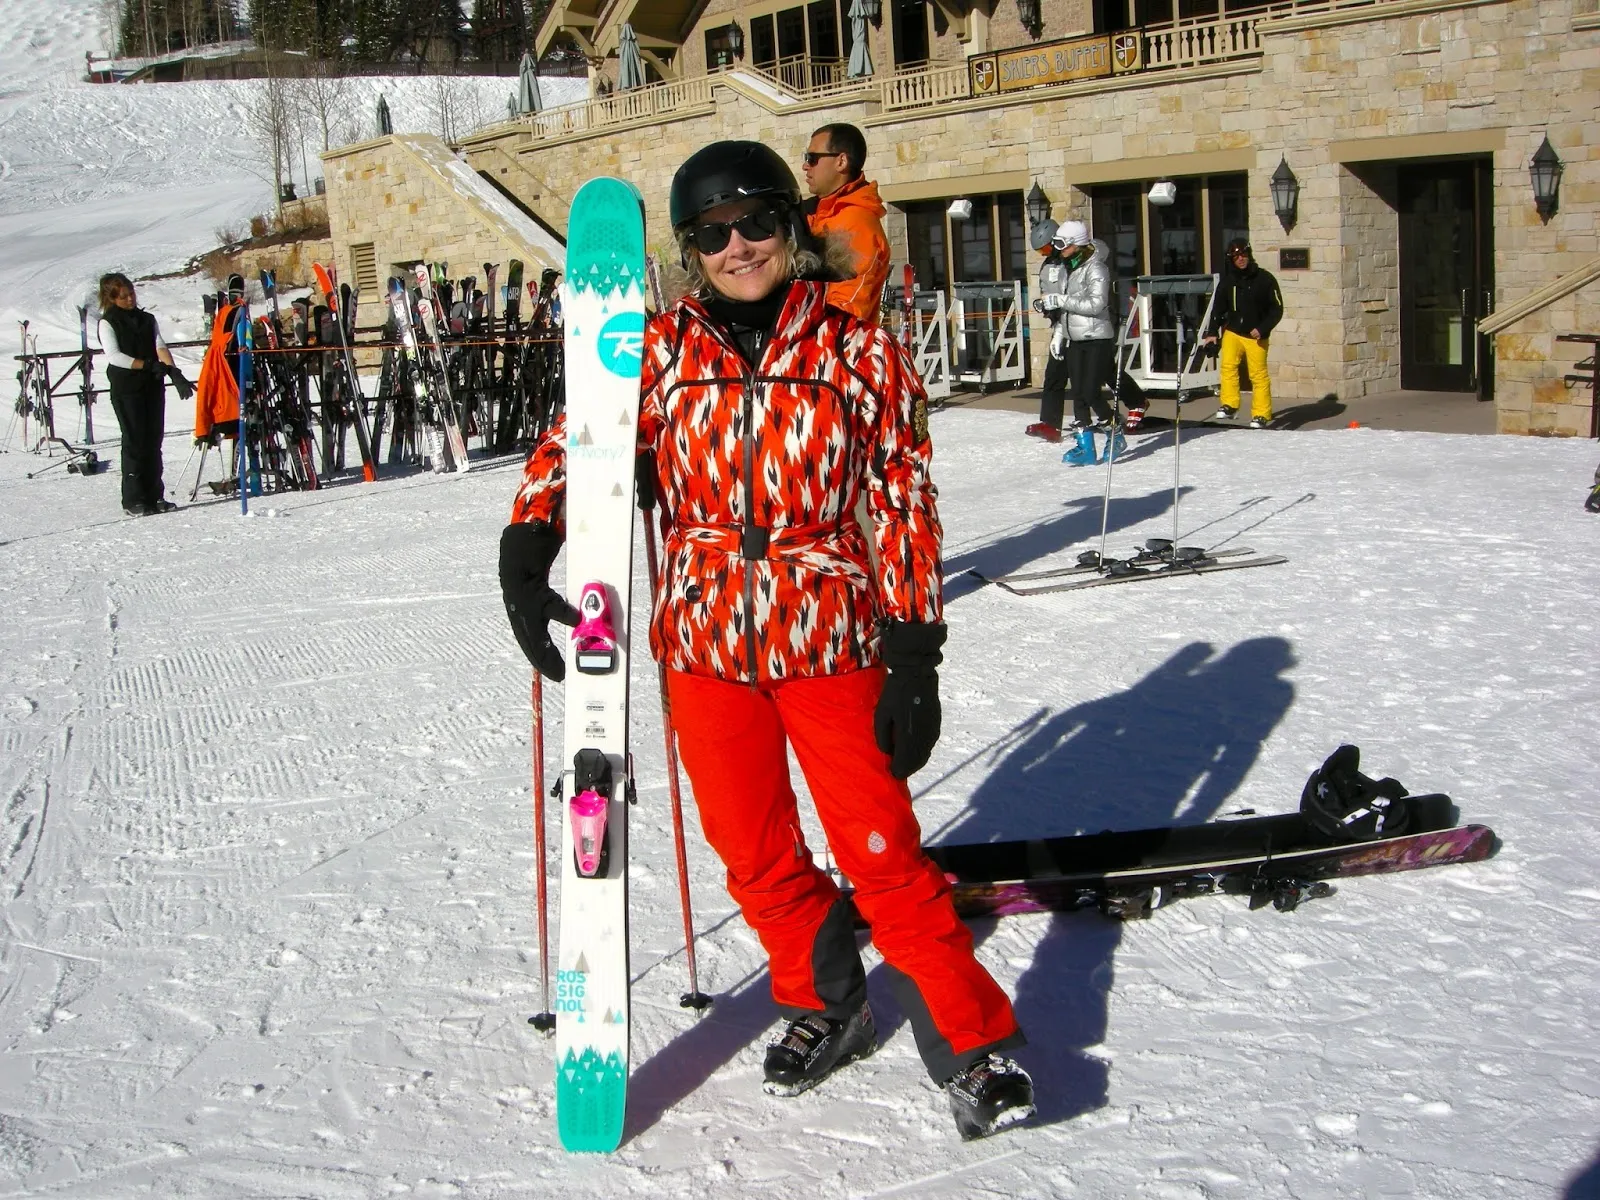 Oxygene Ski & Snowboard School & Rental Shop in France, Europe | Snowboarding,Skiing - Rated 0.8